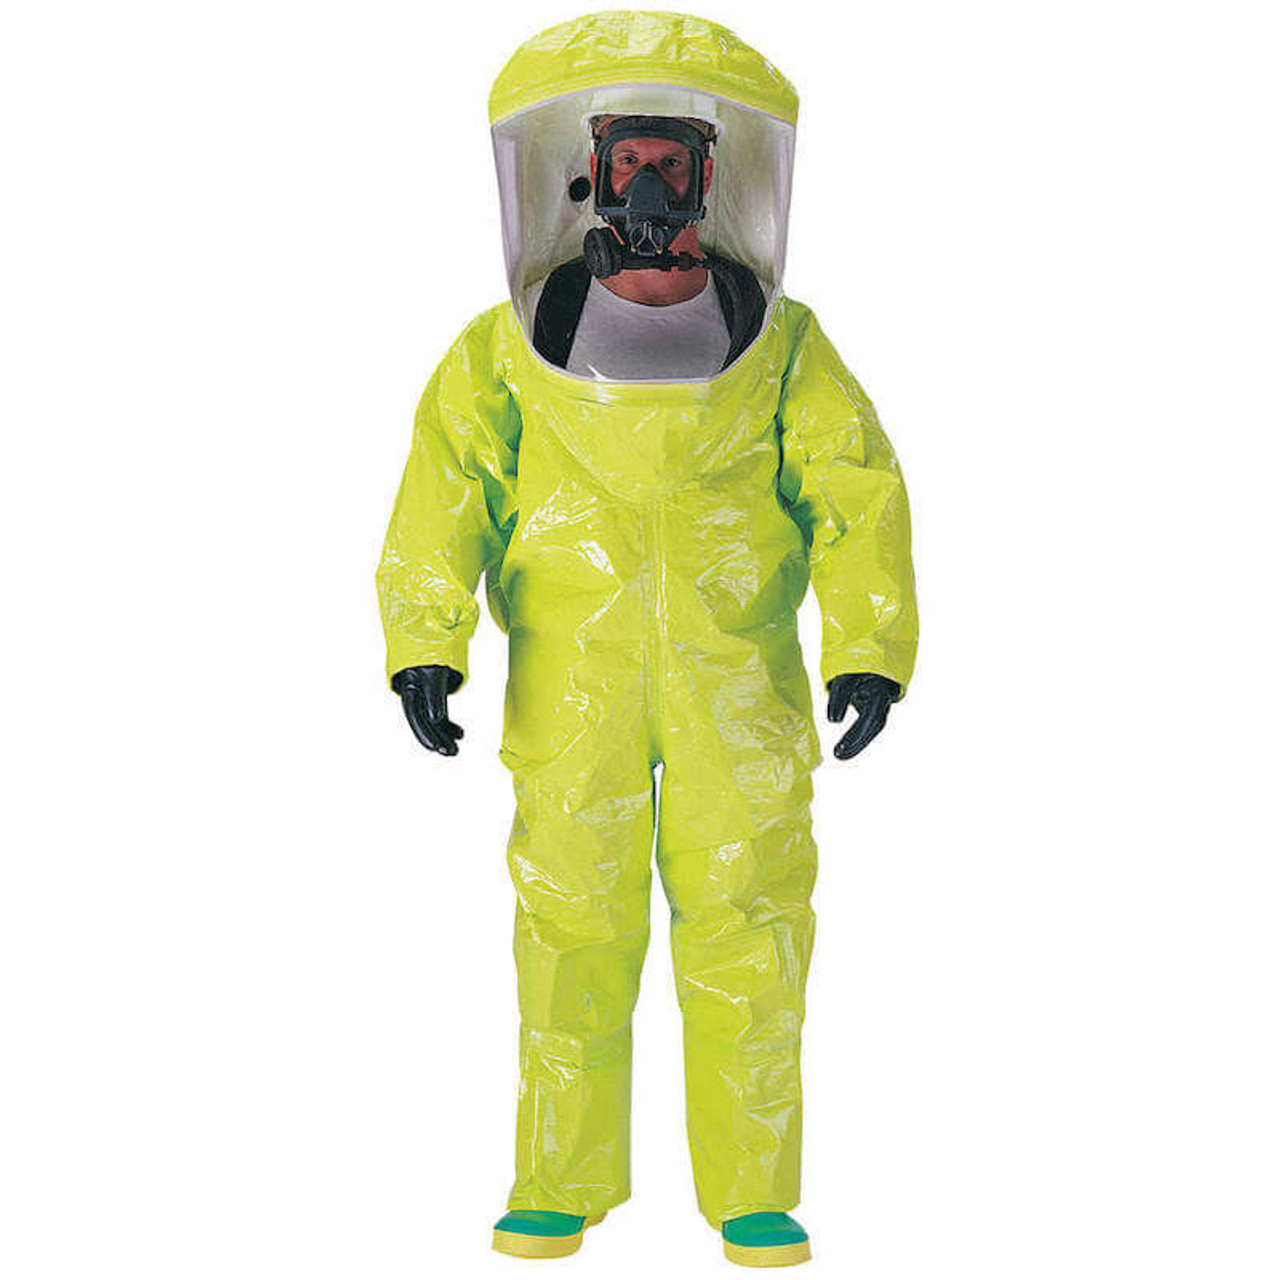 Tychem Level A Suit - Chemical Protective Suit